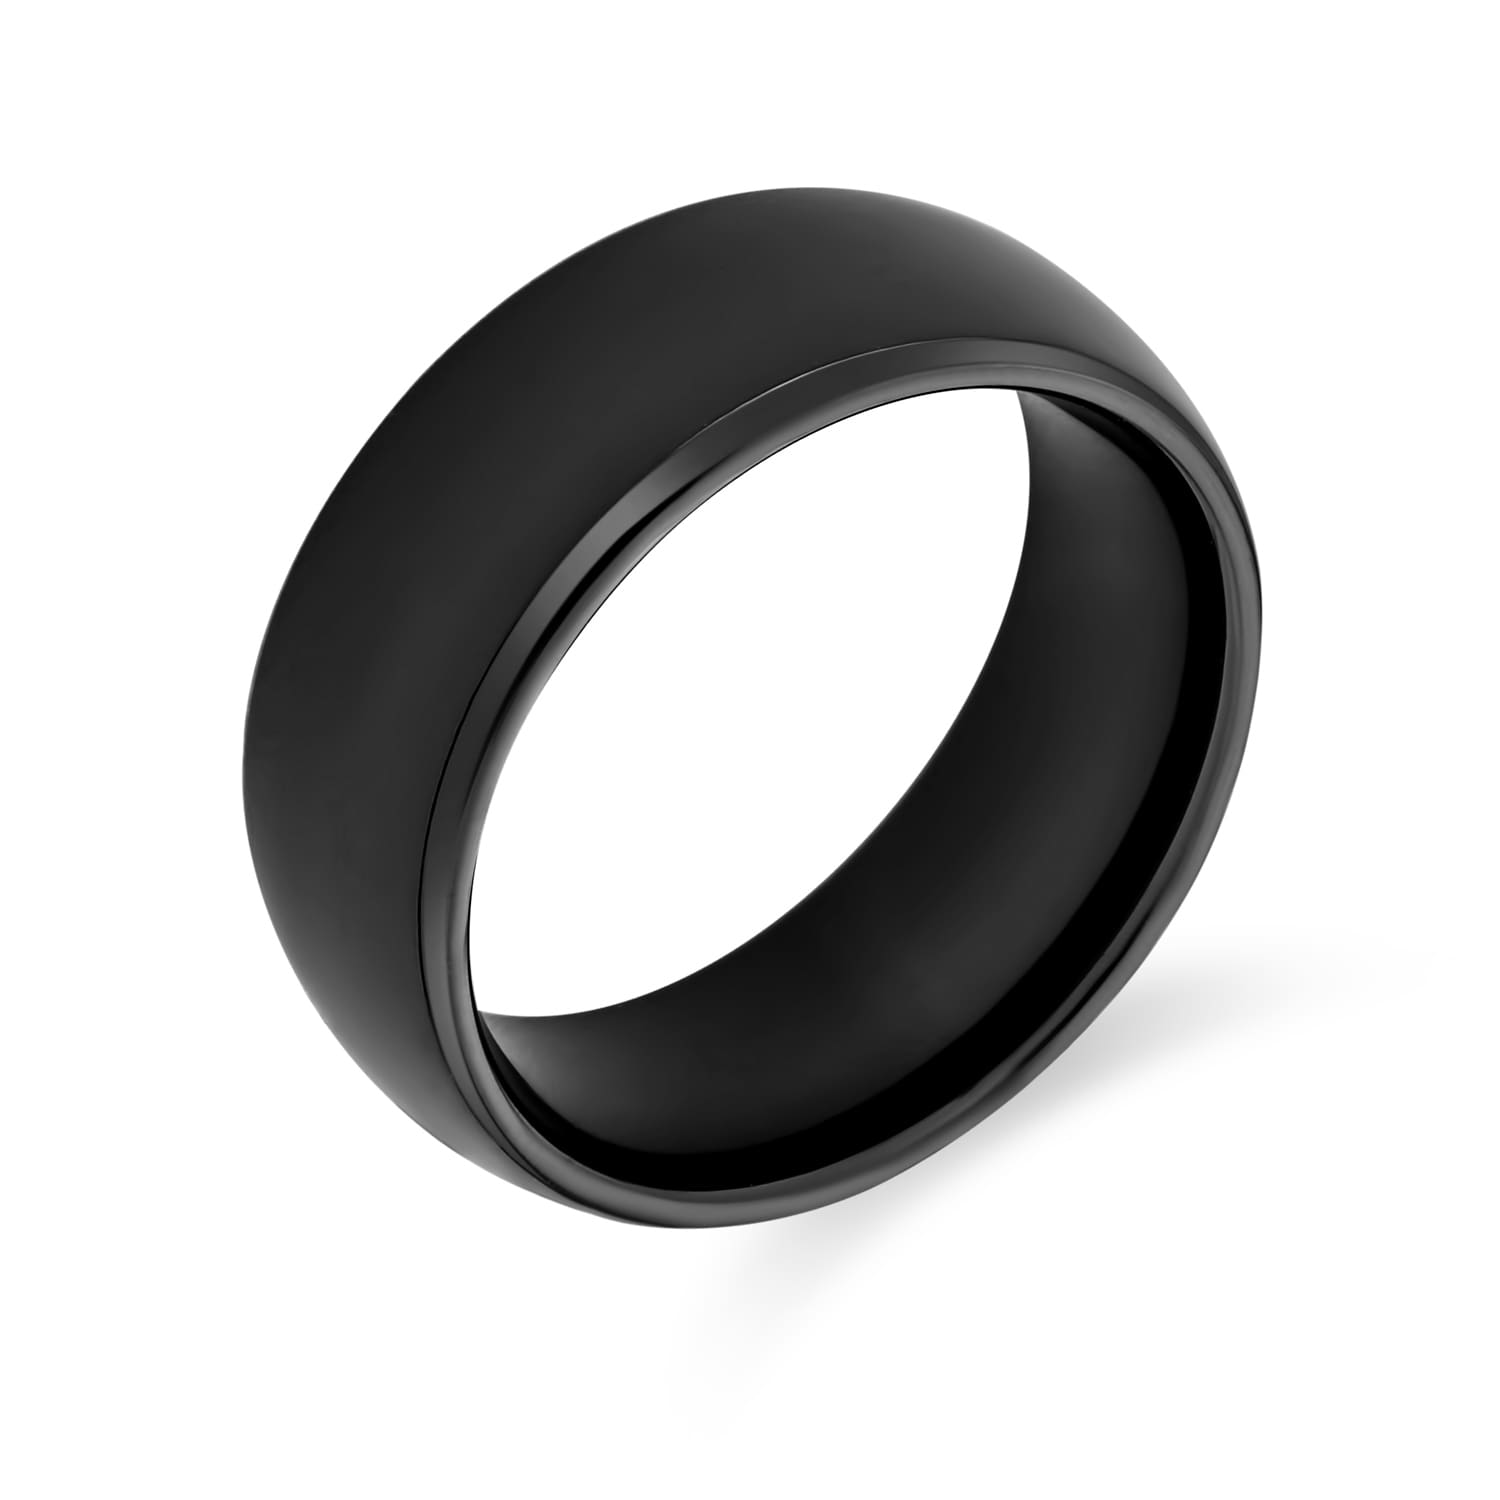 Gembrooke Creations Women's Titanium 8mm Polished Dome Plain Wedding Band Ring